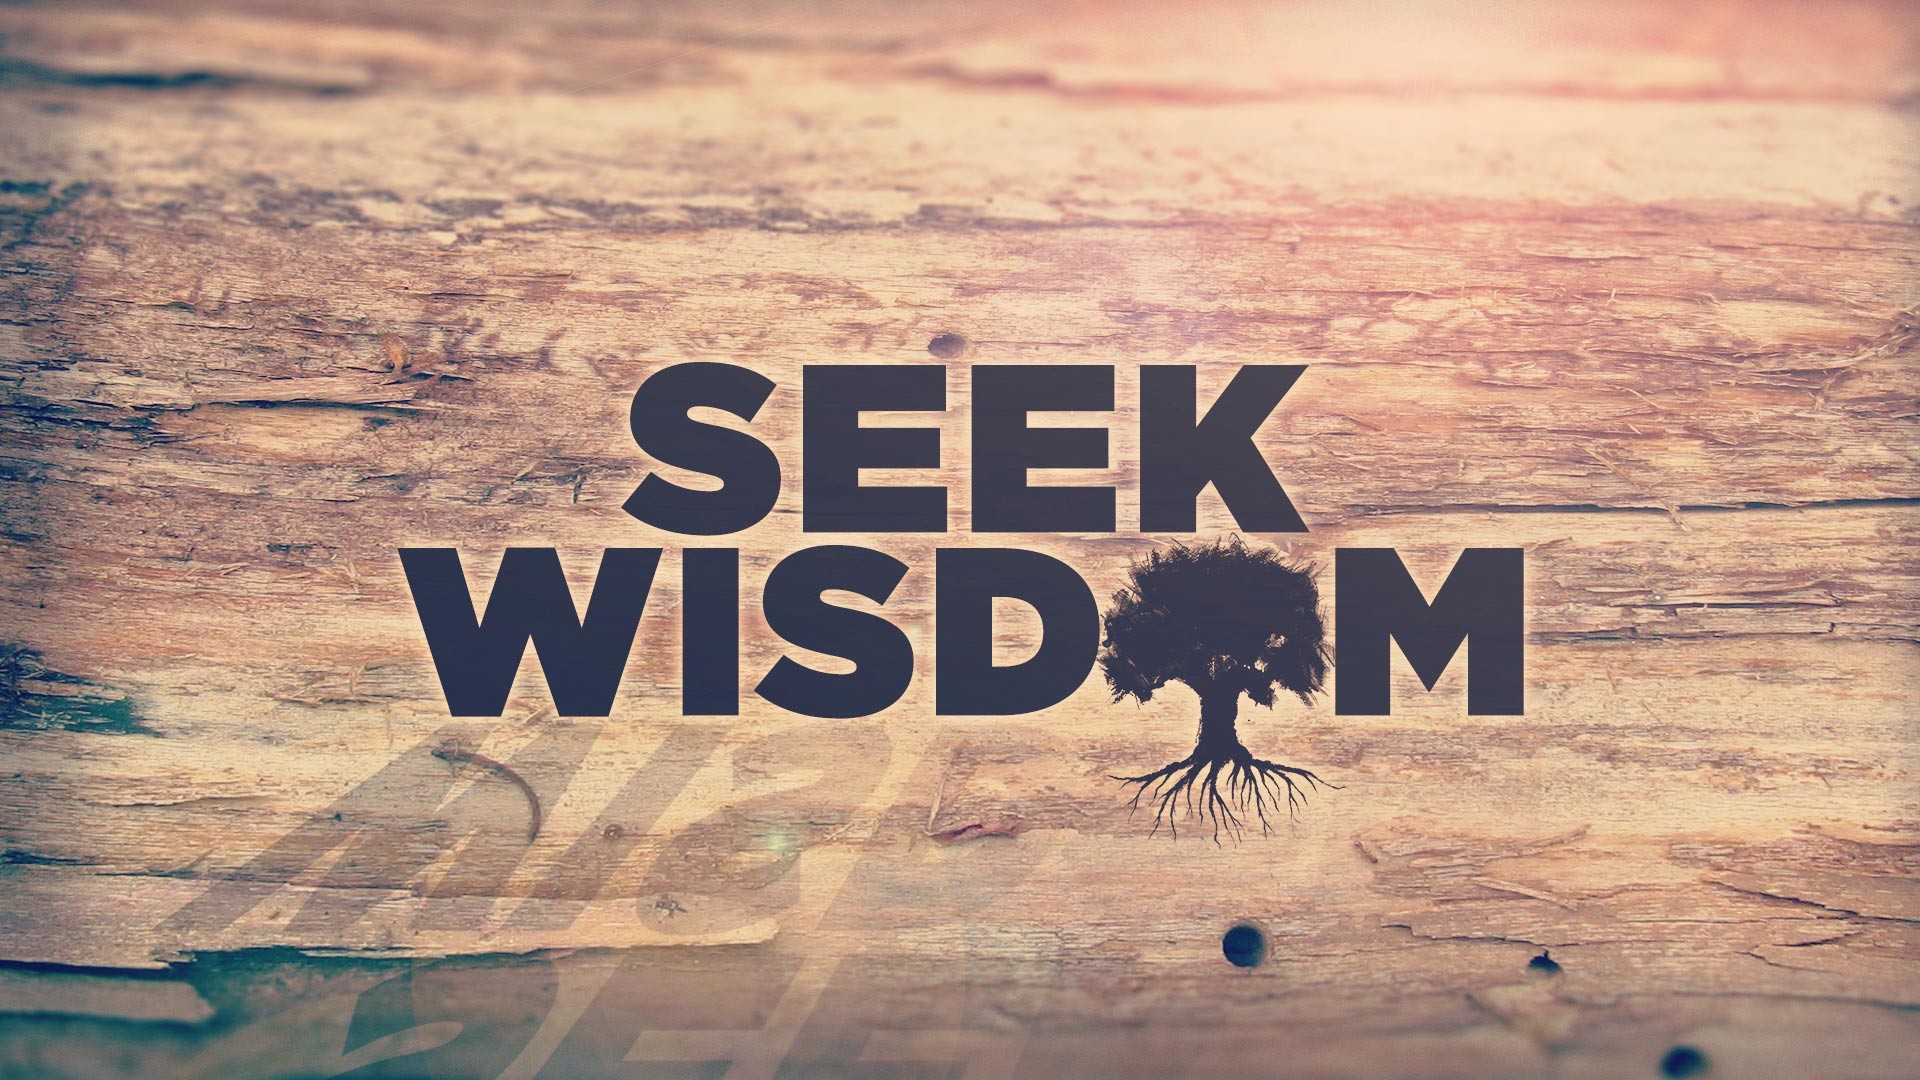 Christian HD Wallpaper Seek Wisdom